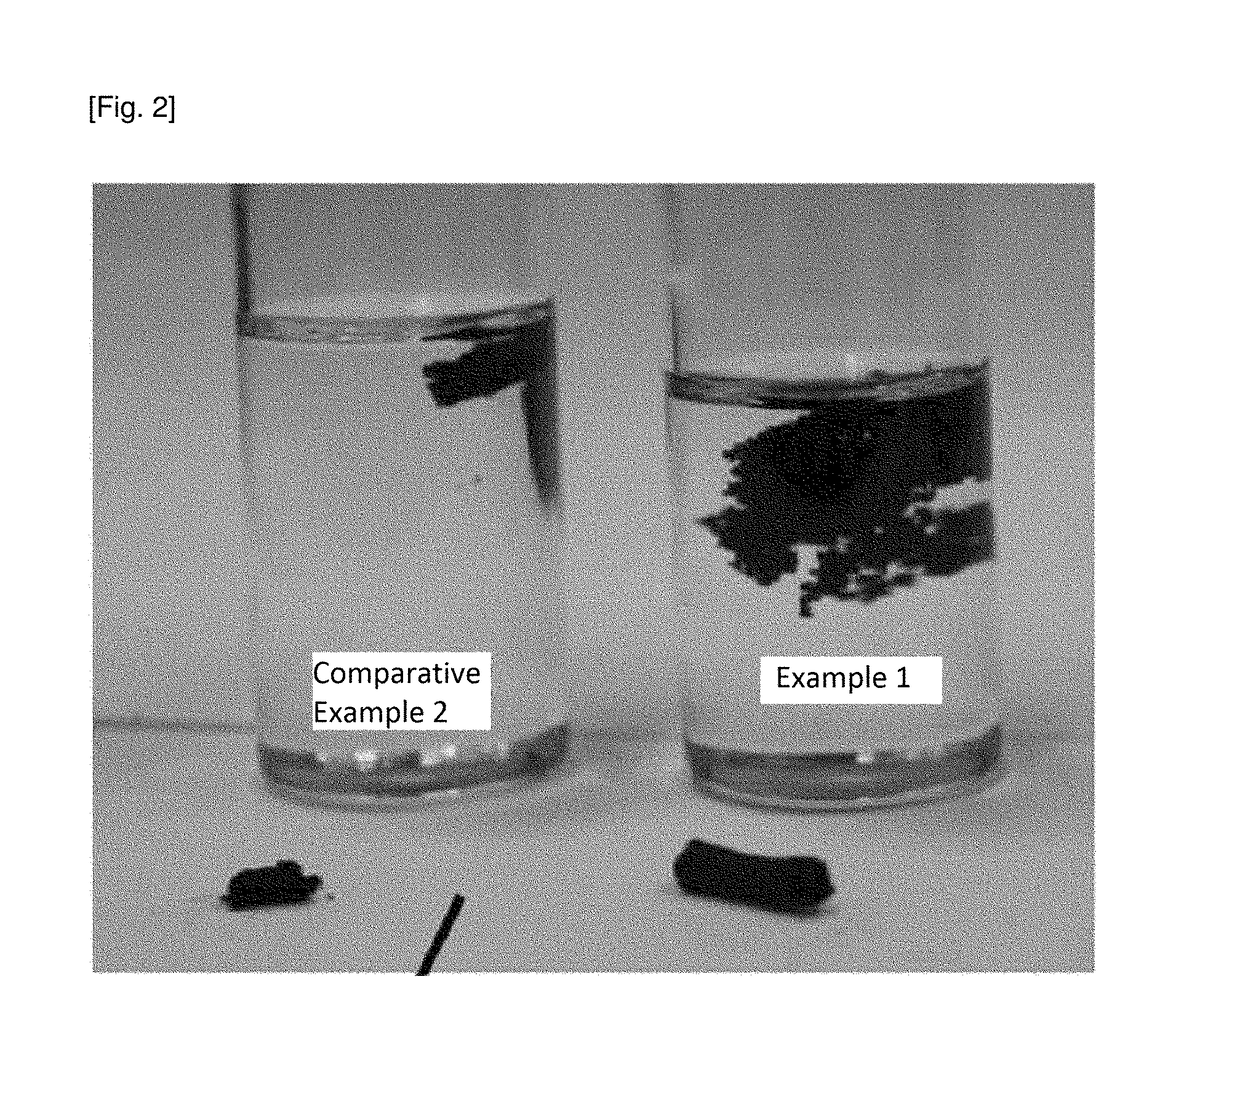 Carbon nanotube pellets and method for manufacturing same